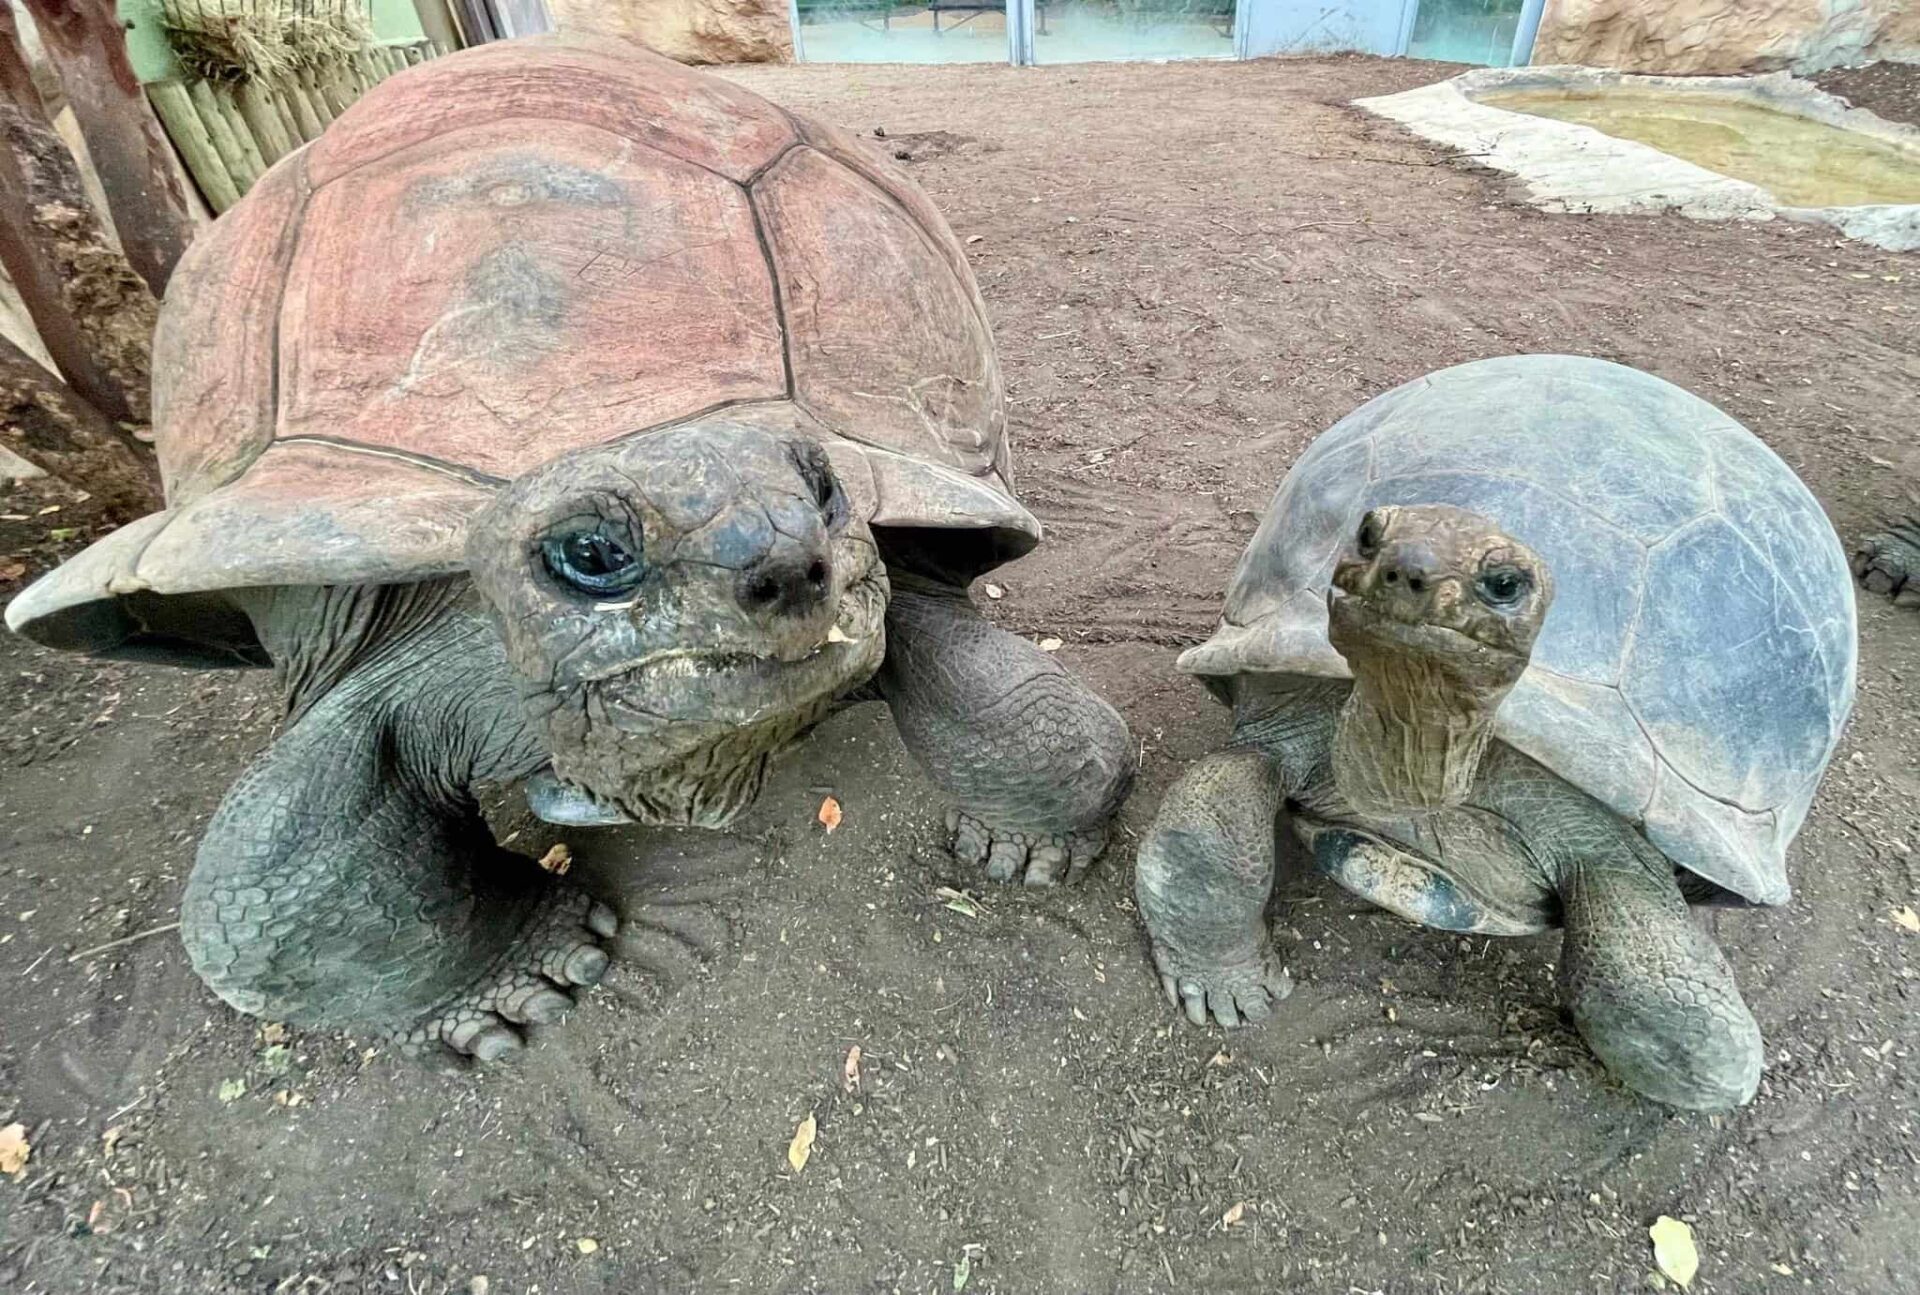 Tortoises posing together